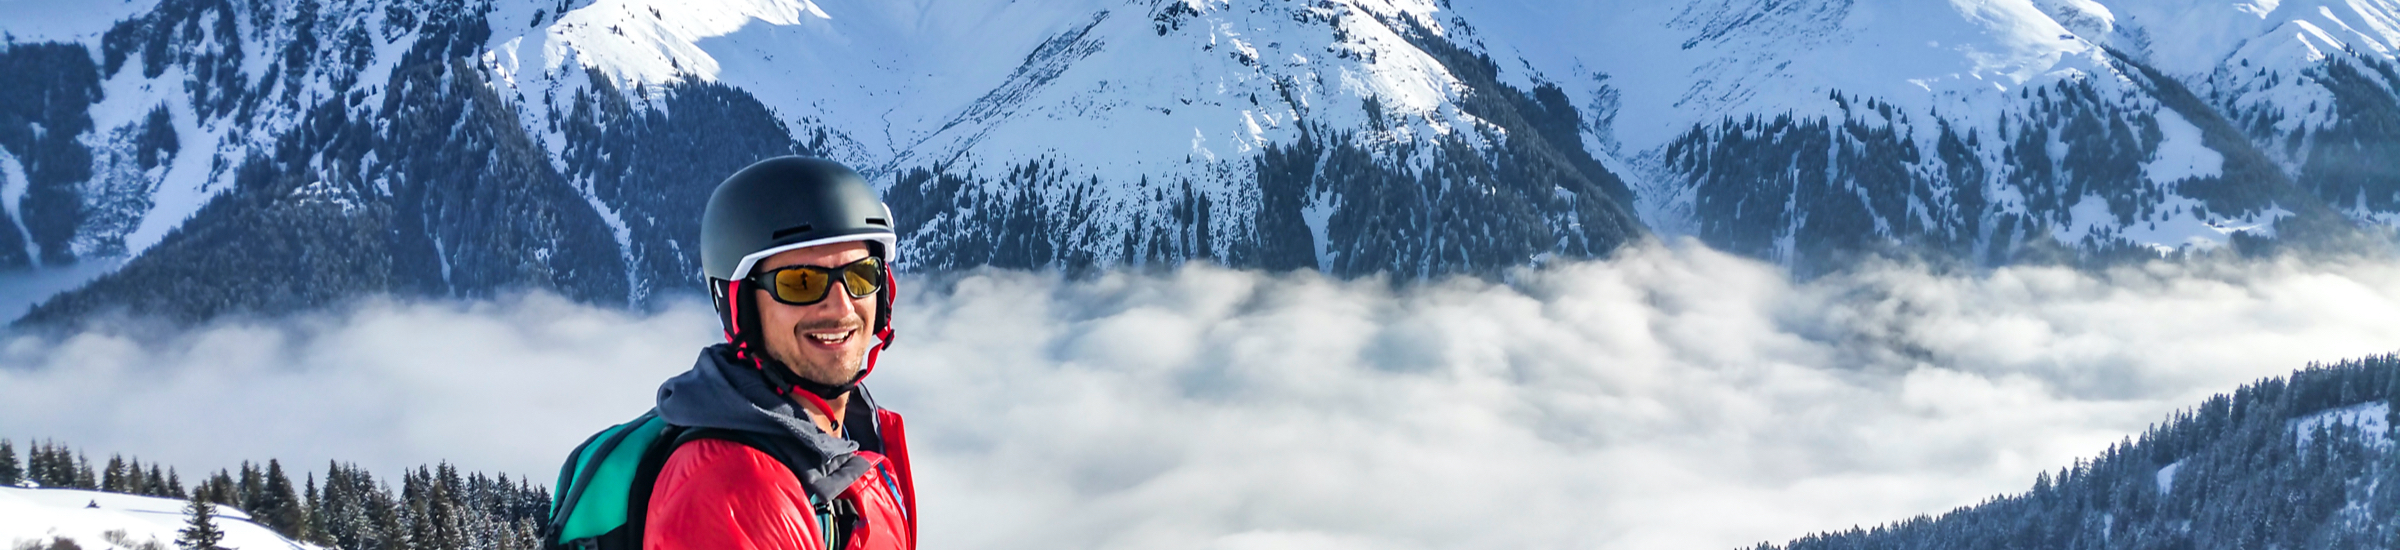 Skifahrer in Bayern mit Bergpanorama